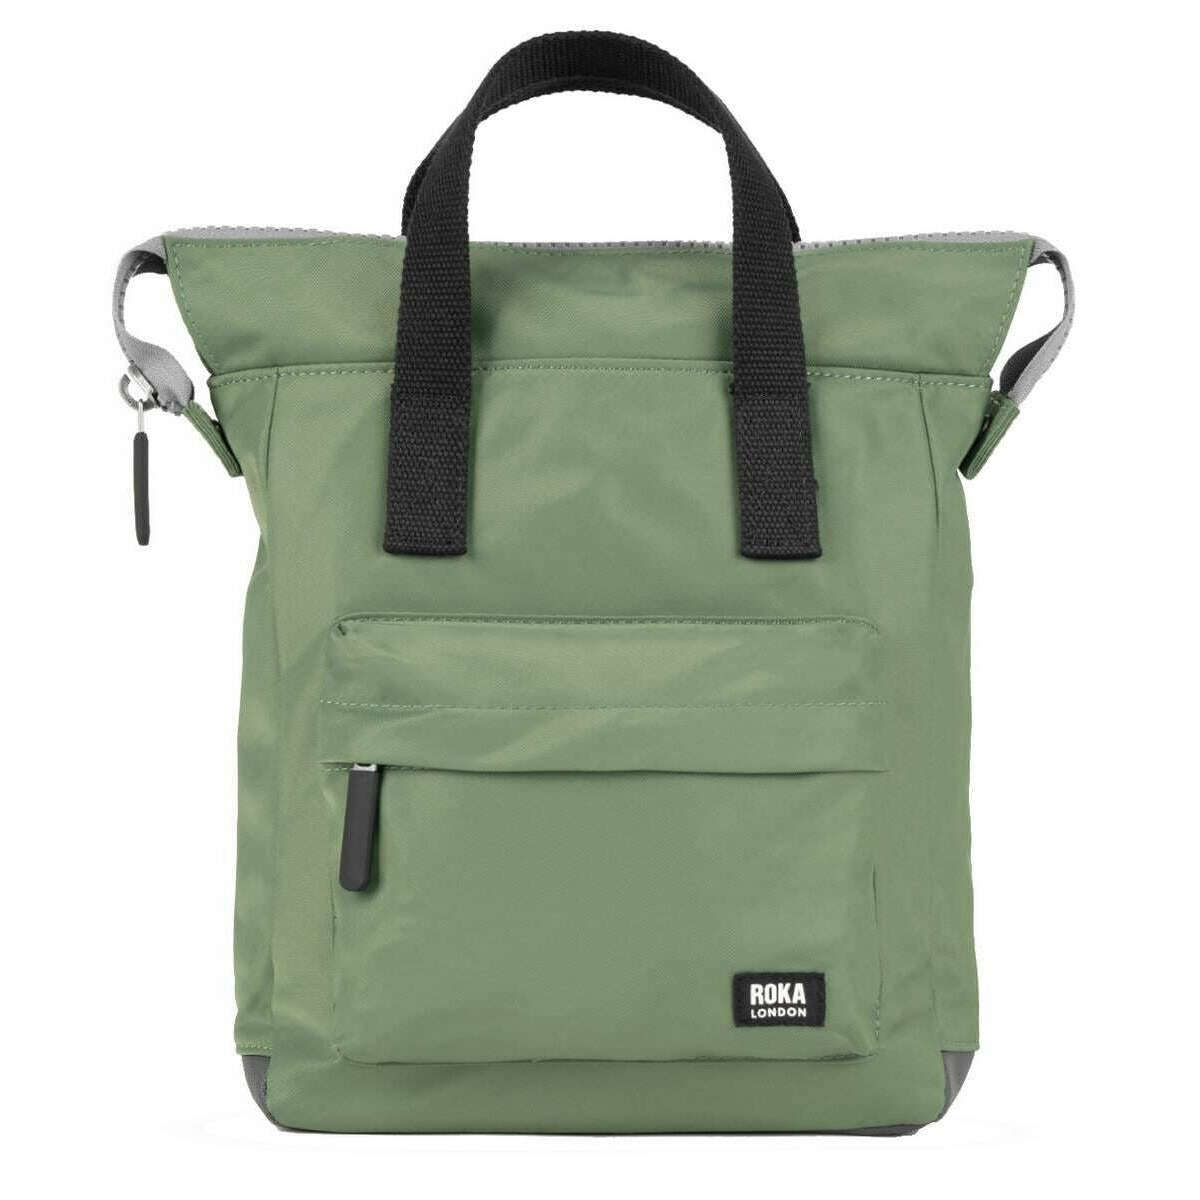 Roka Bantry B Small Black Label Recycled Nylon Backpack - Granite Green